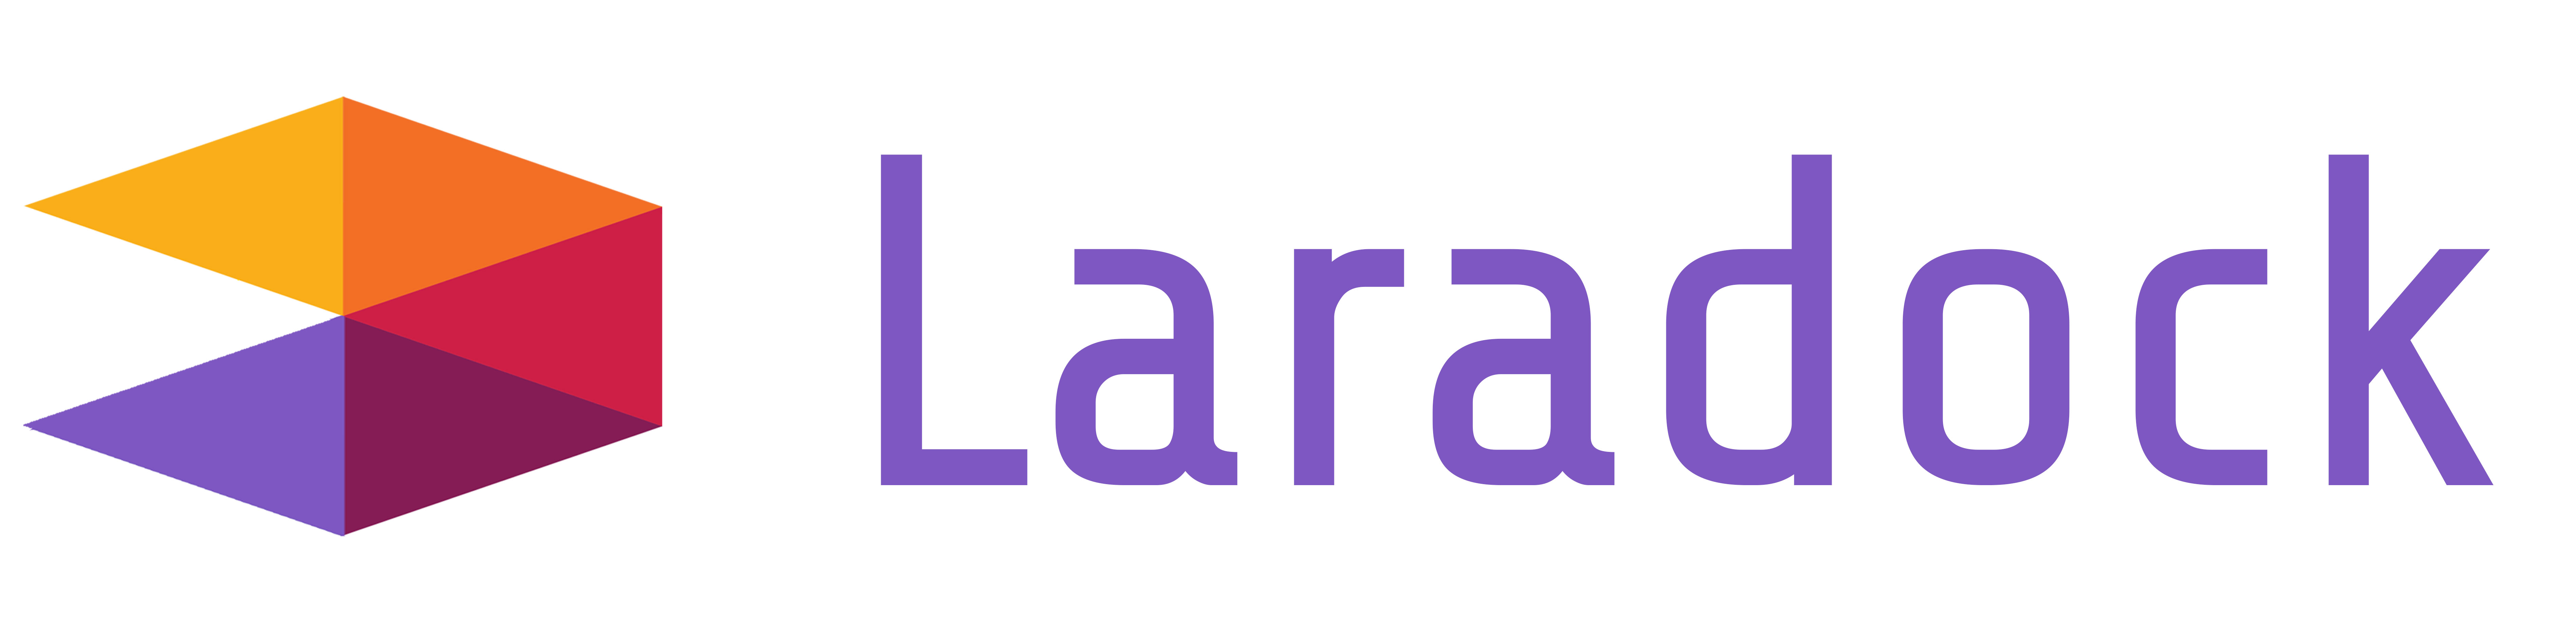 .github/home-page-images/laradock-logo.jpg